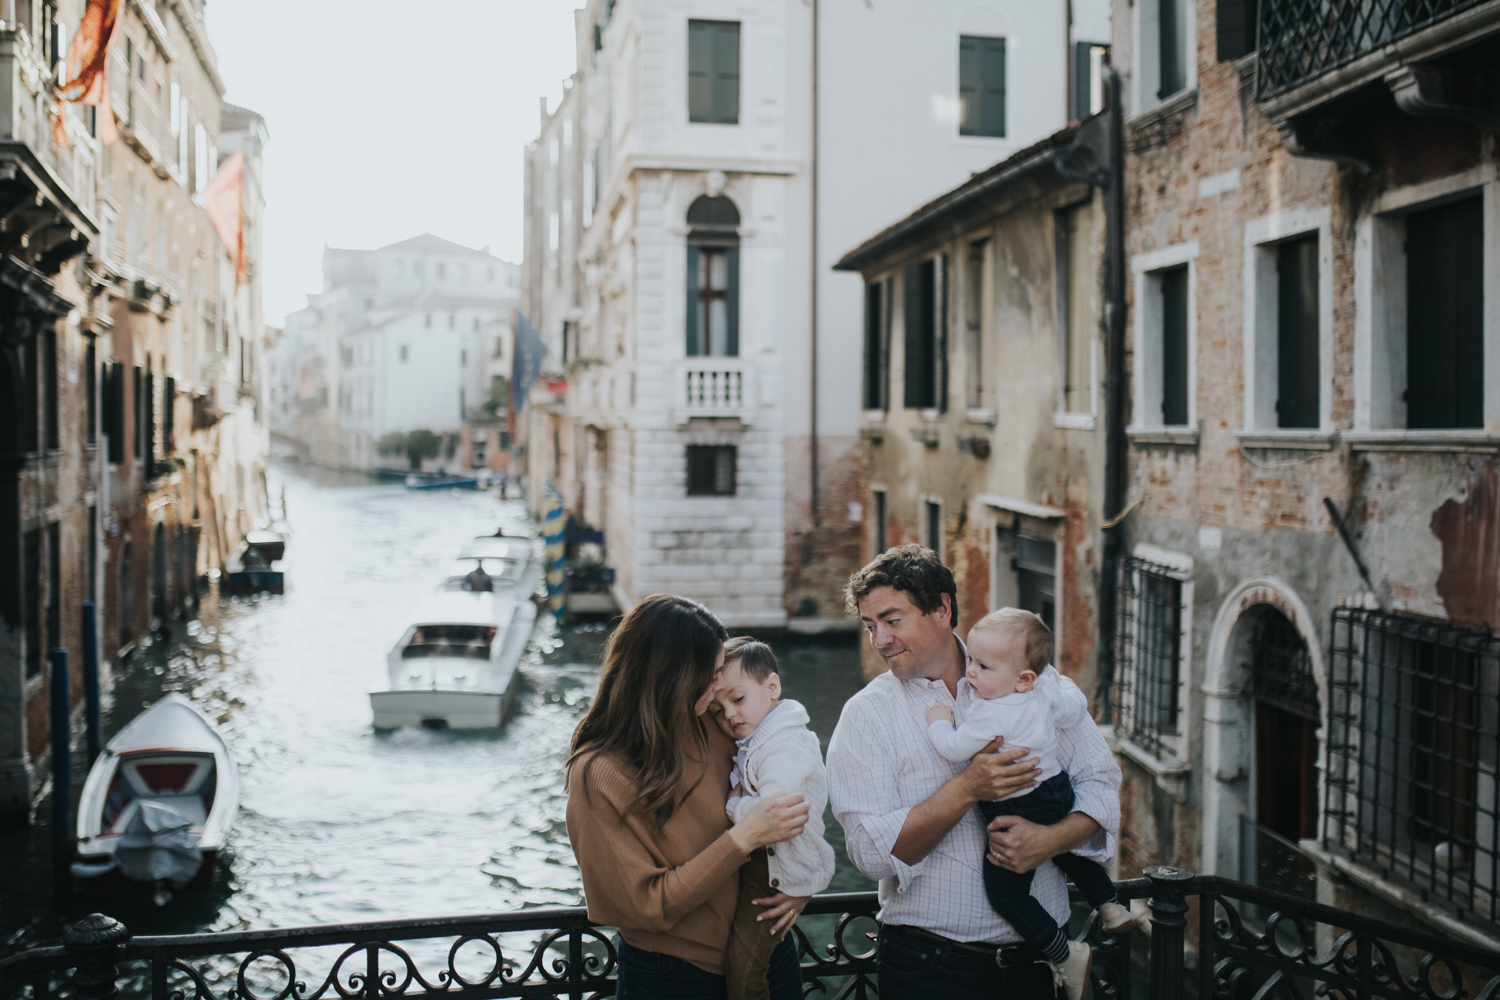 Photoshoot in Venice, Italy